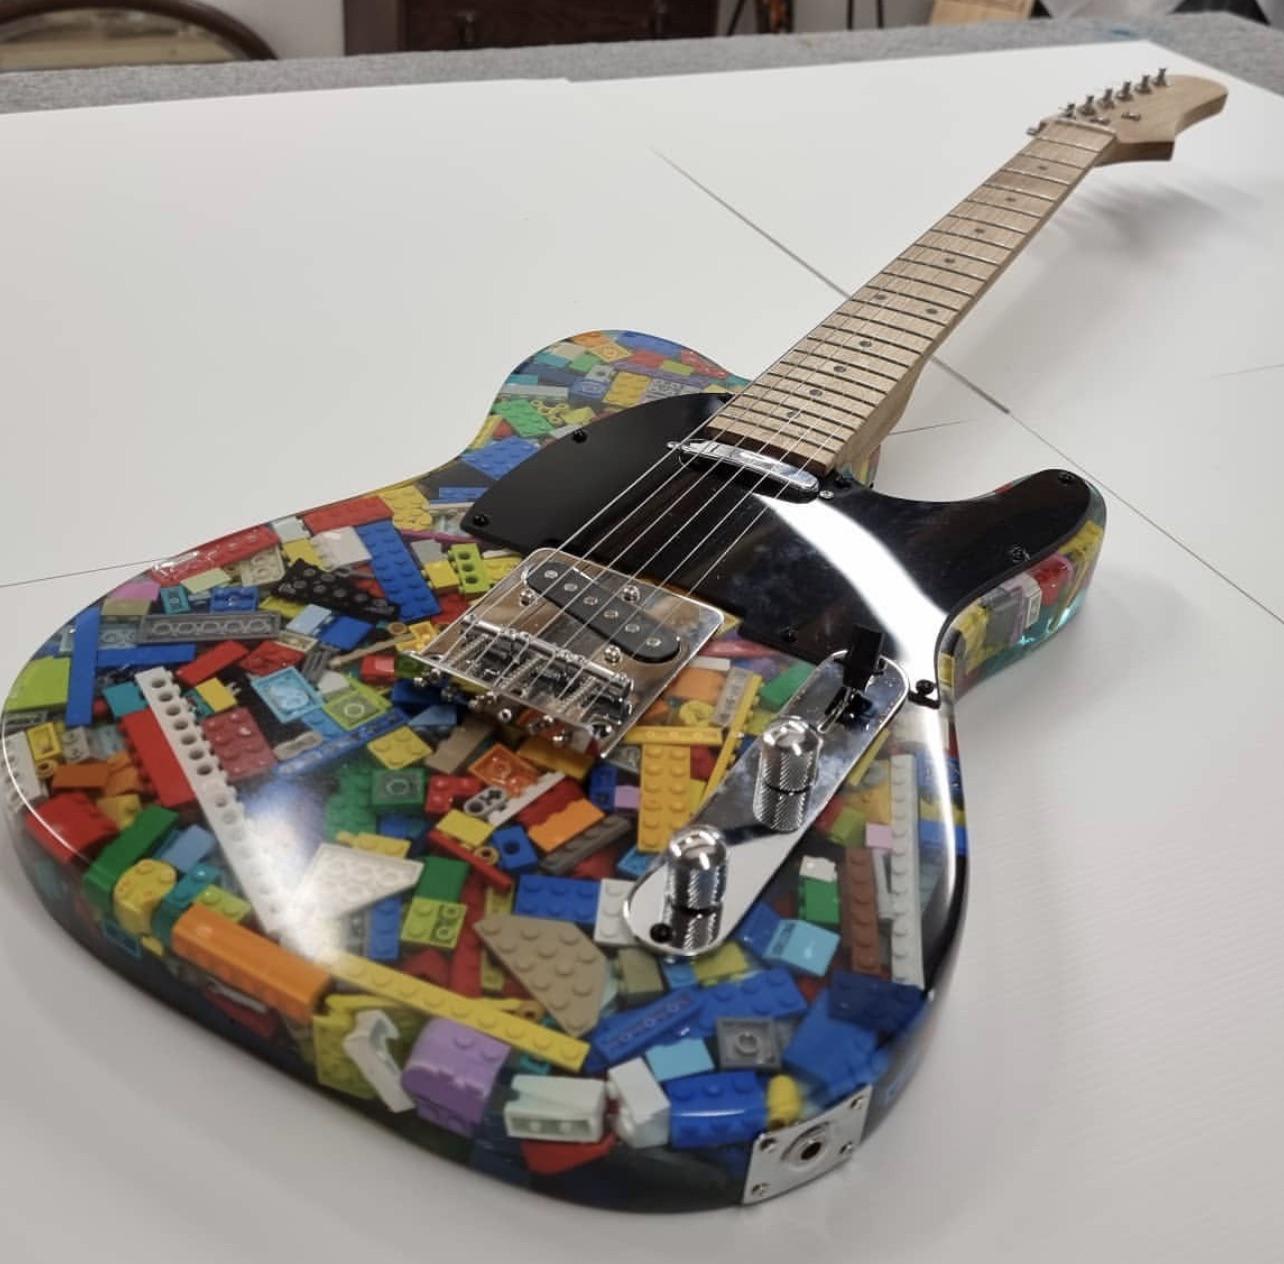 I made a Lego Guitar using Epoxy Resin